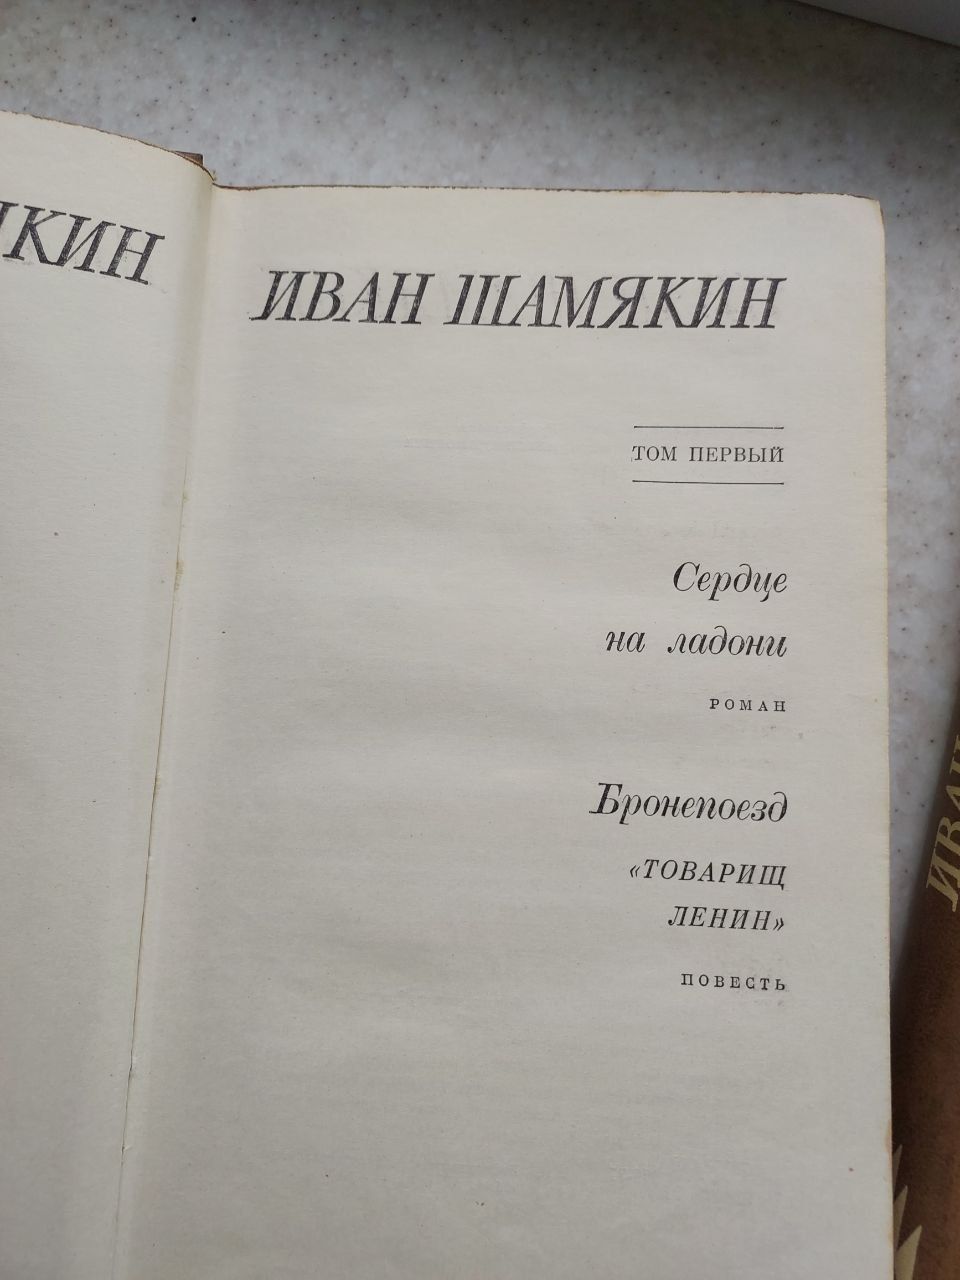 Книга Иван Шамякин книги литература 2 тома література